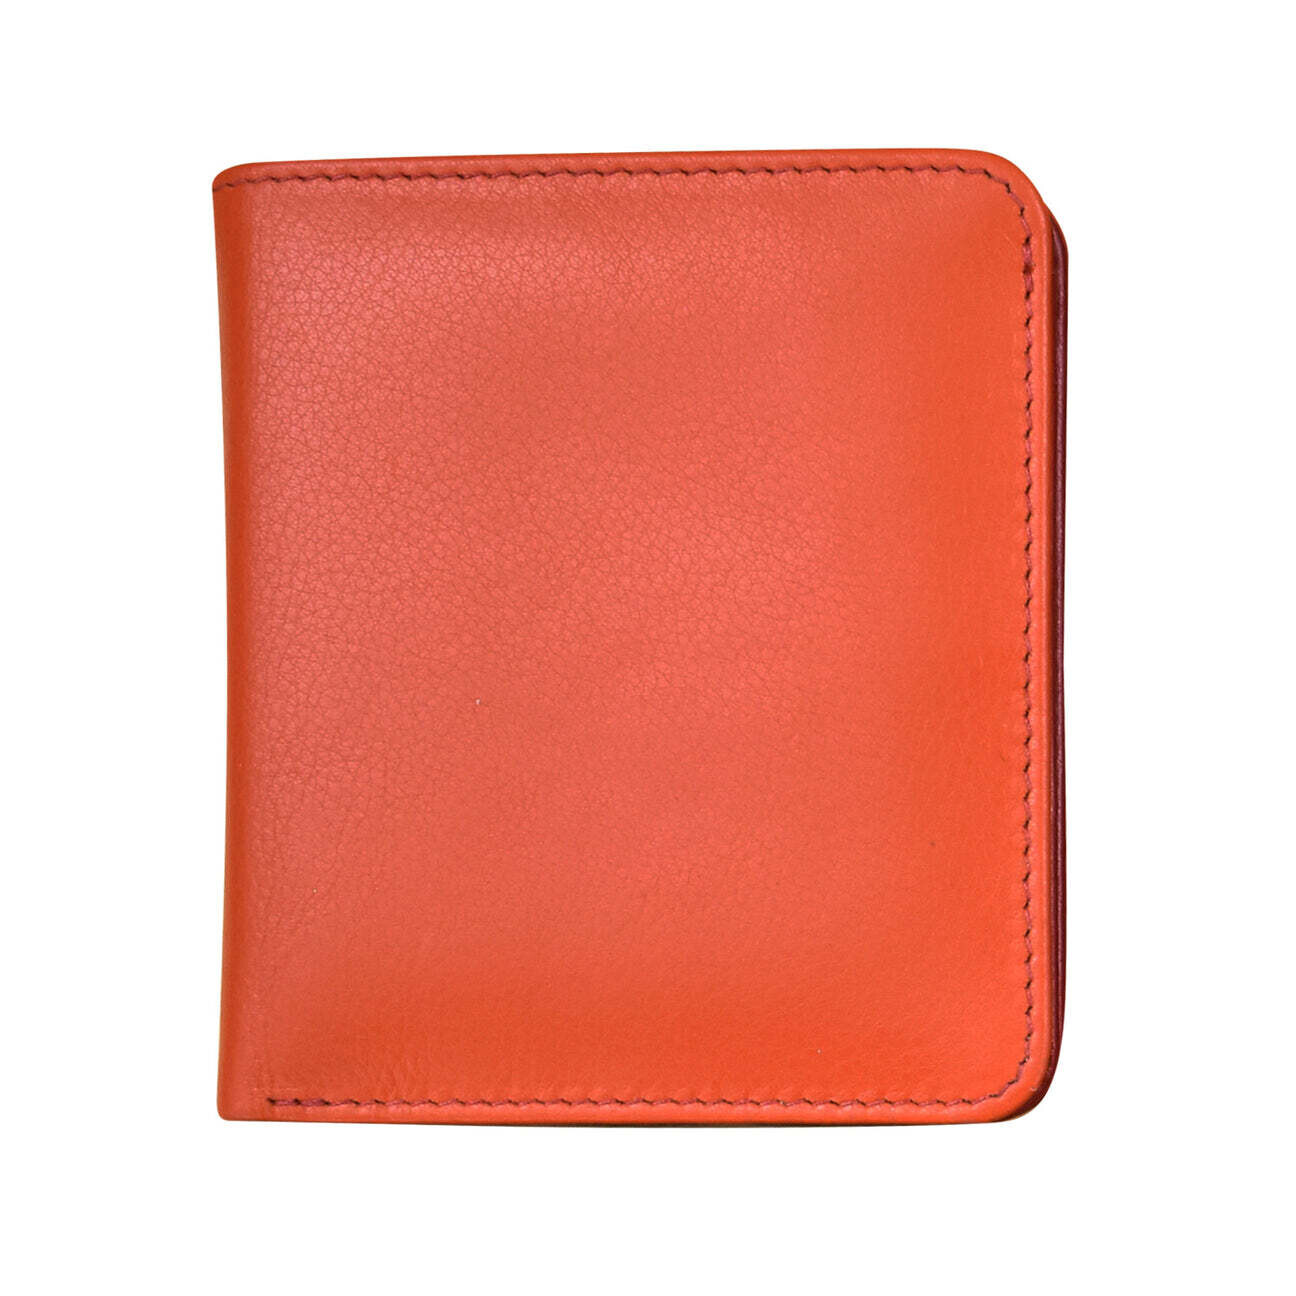 Two Tone Wallet-Orange/Red